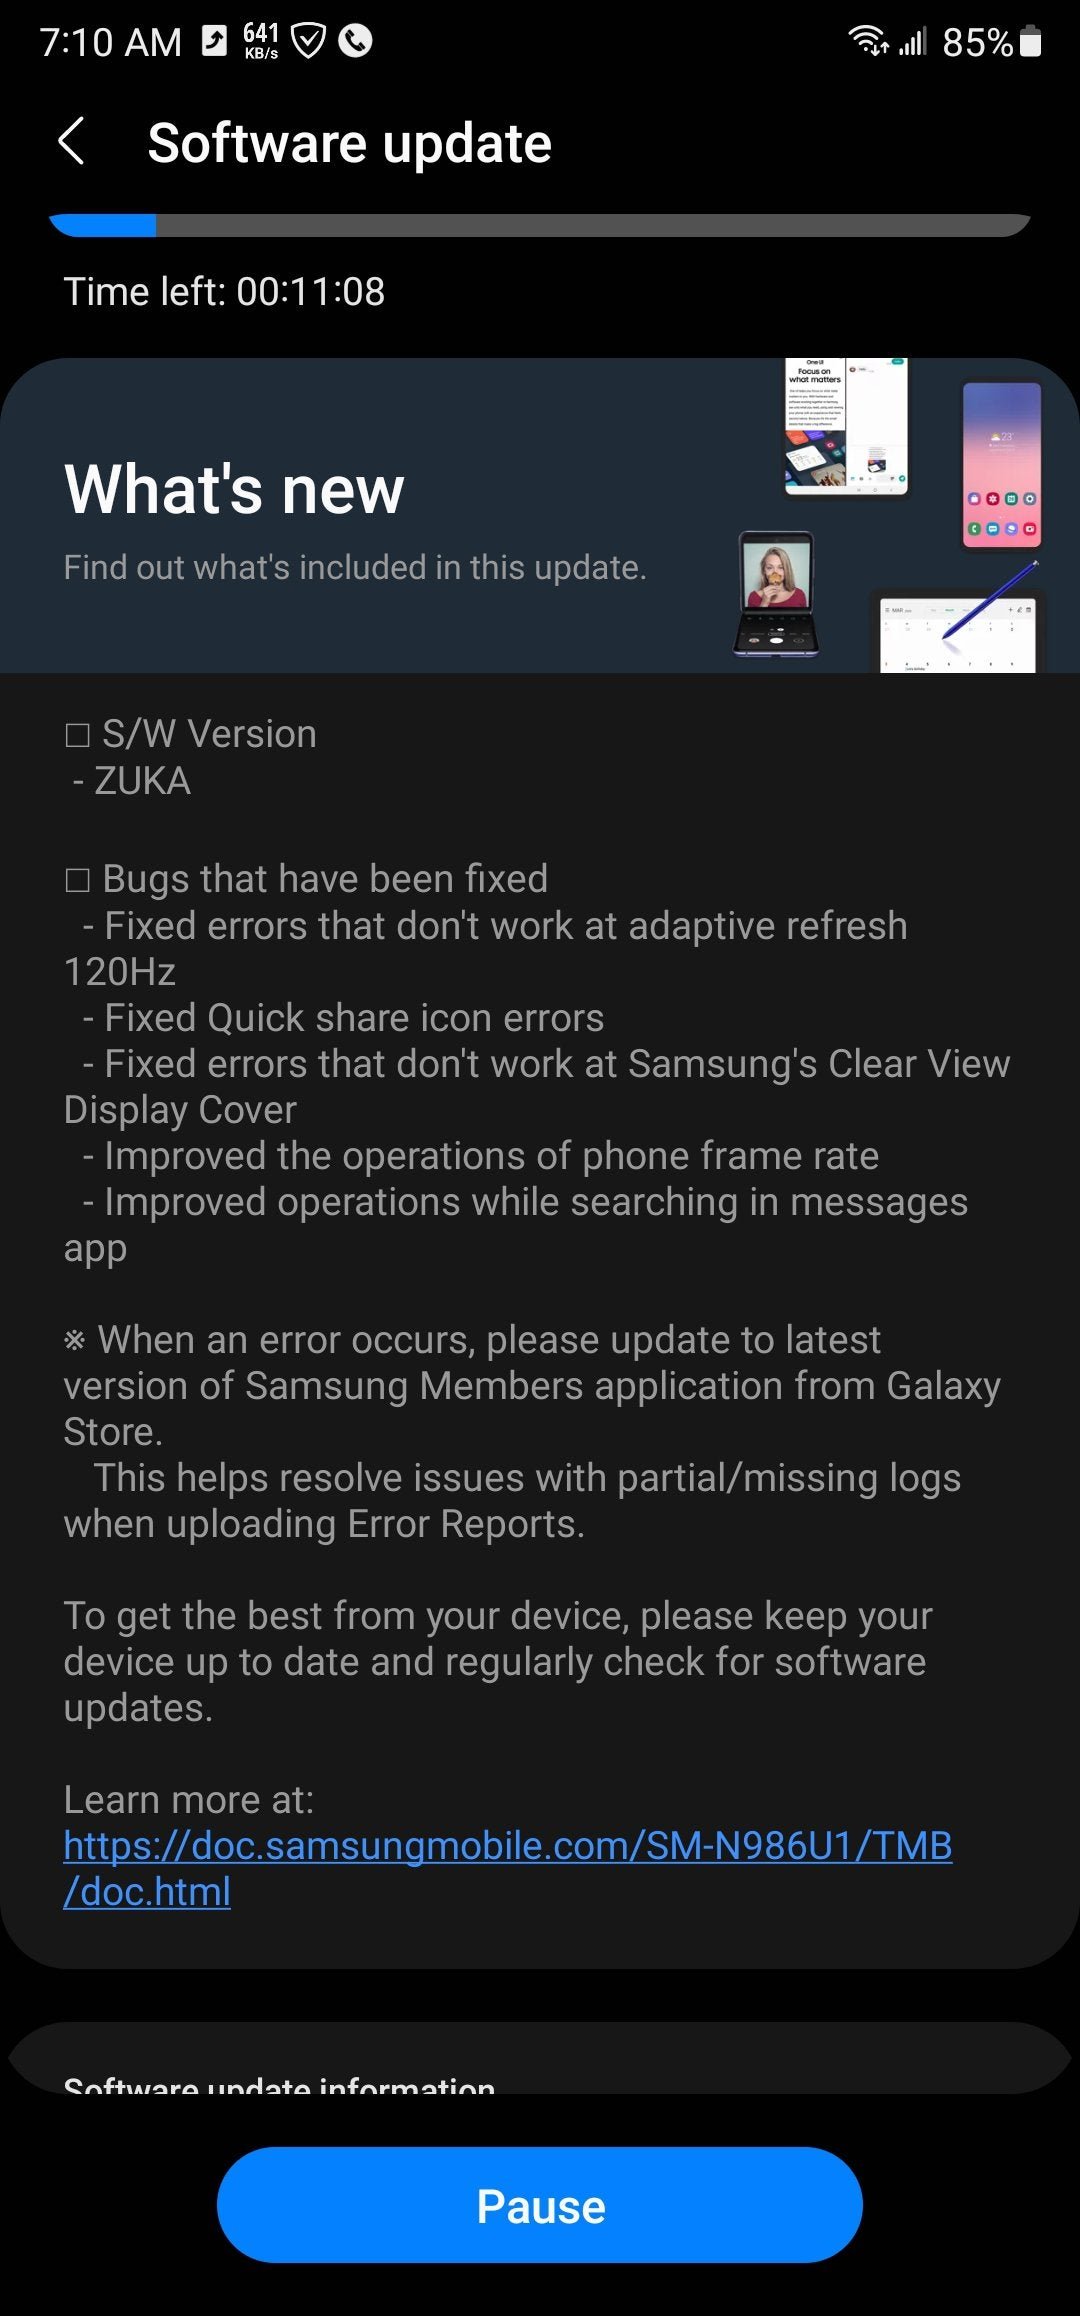 Samsung Galaxy S20 Ultra One UI 4.0 Beta Update ZUKA